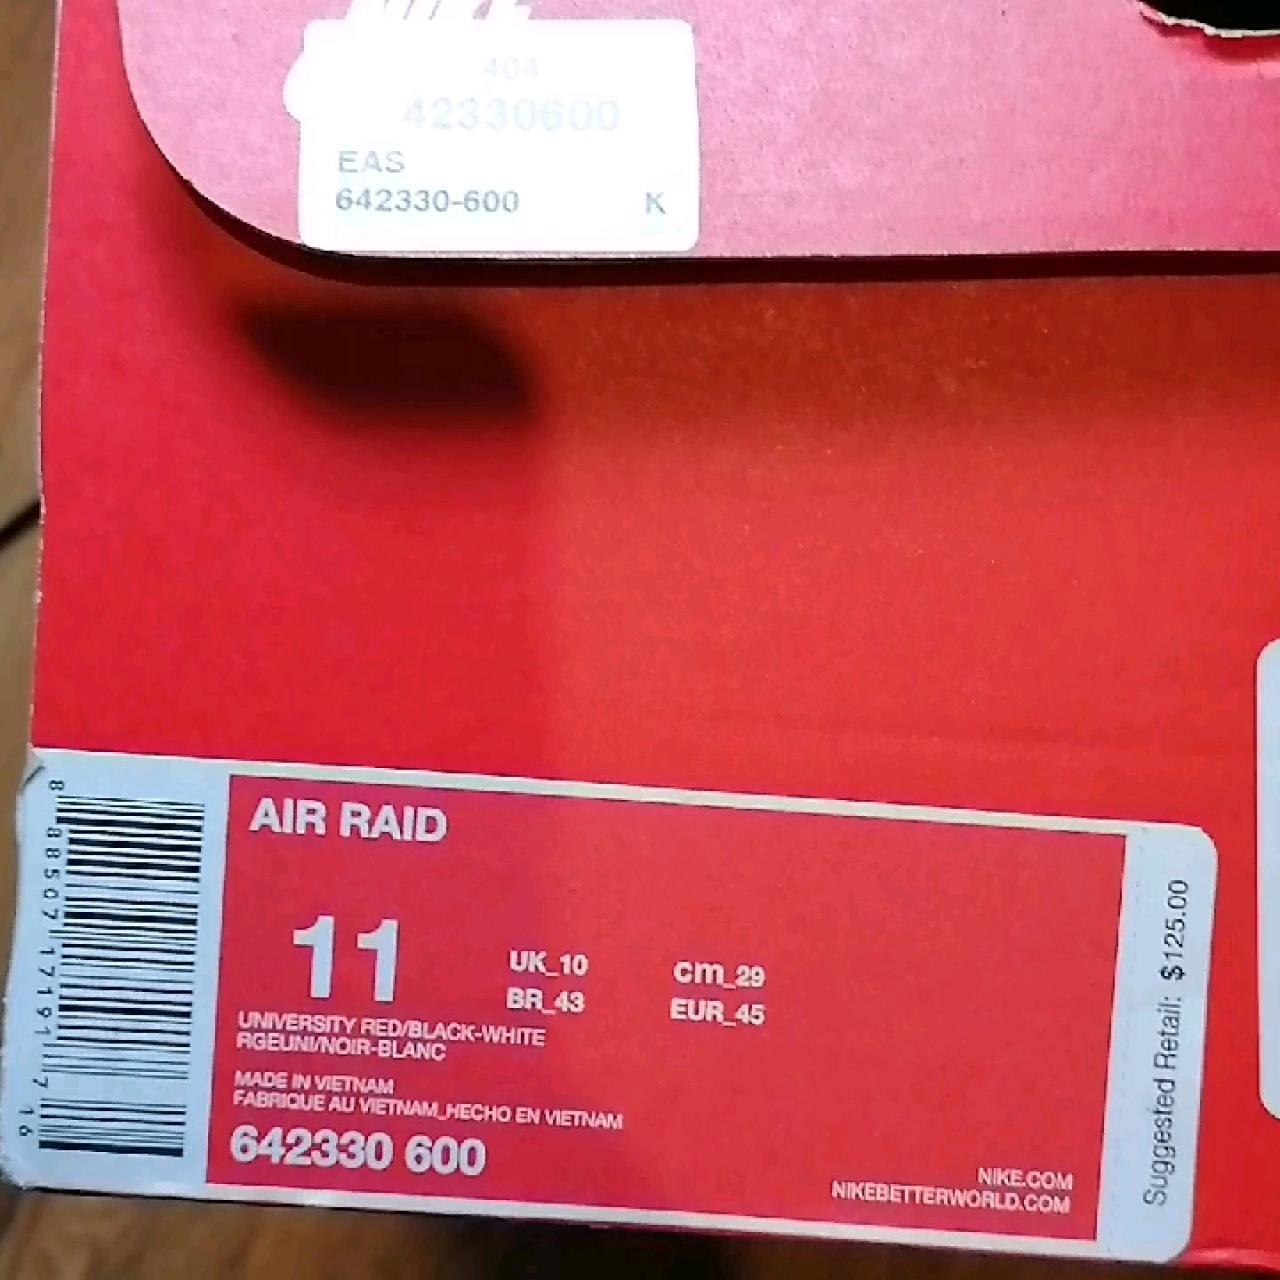 Nike Air Raid University Red Black Men's - 642330-600 - US